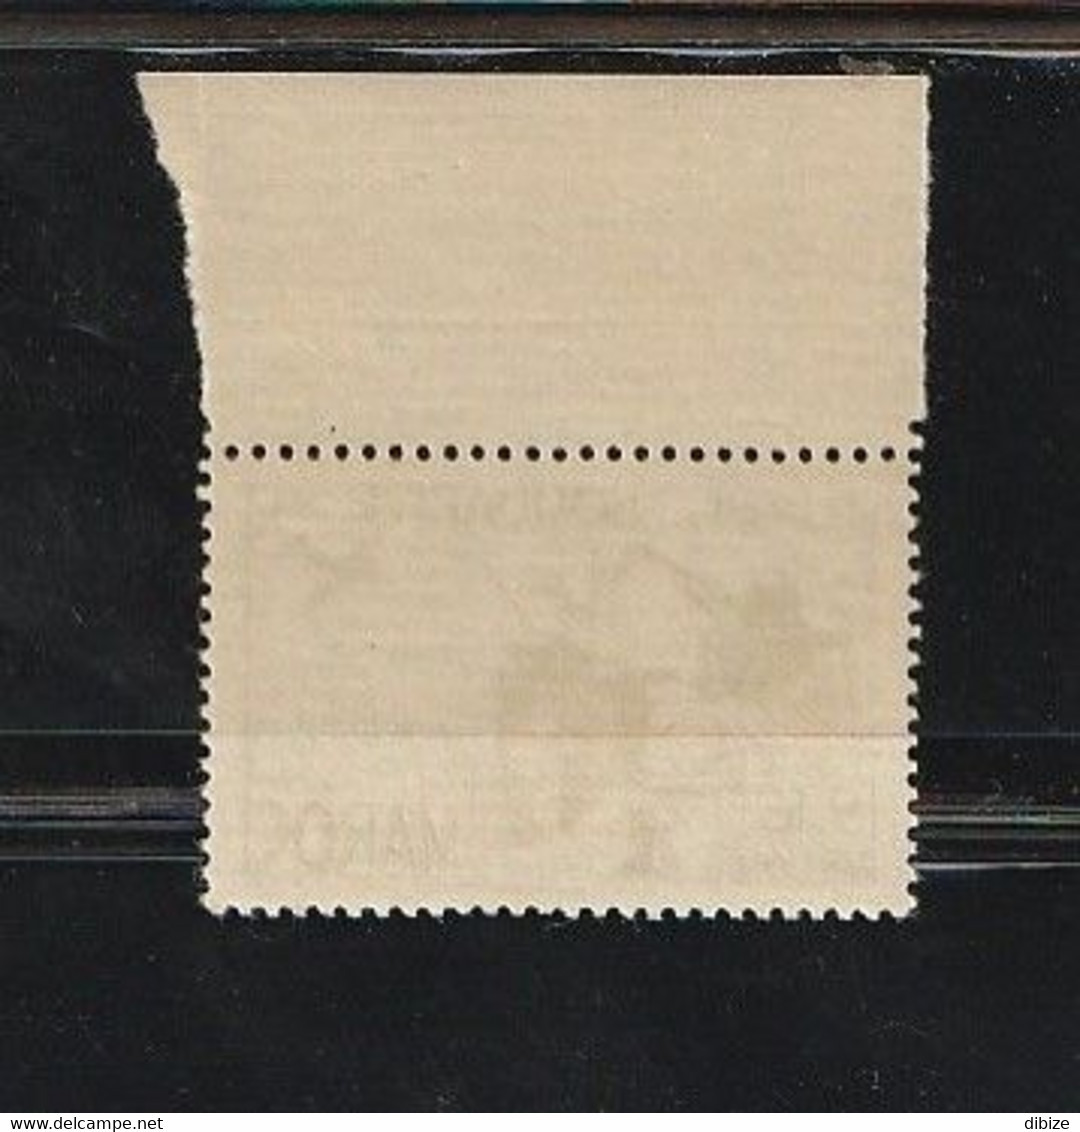 Maroc. Protectorat. Timbre. Poste Aérienne. Yvert & Tellier N° 65. 1948. Solidarité 1947. Ravitaillement. - Luftpost